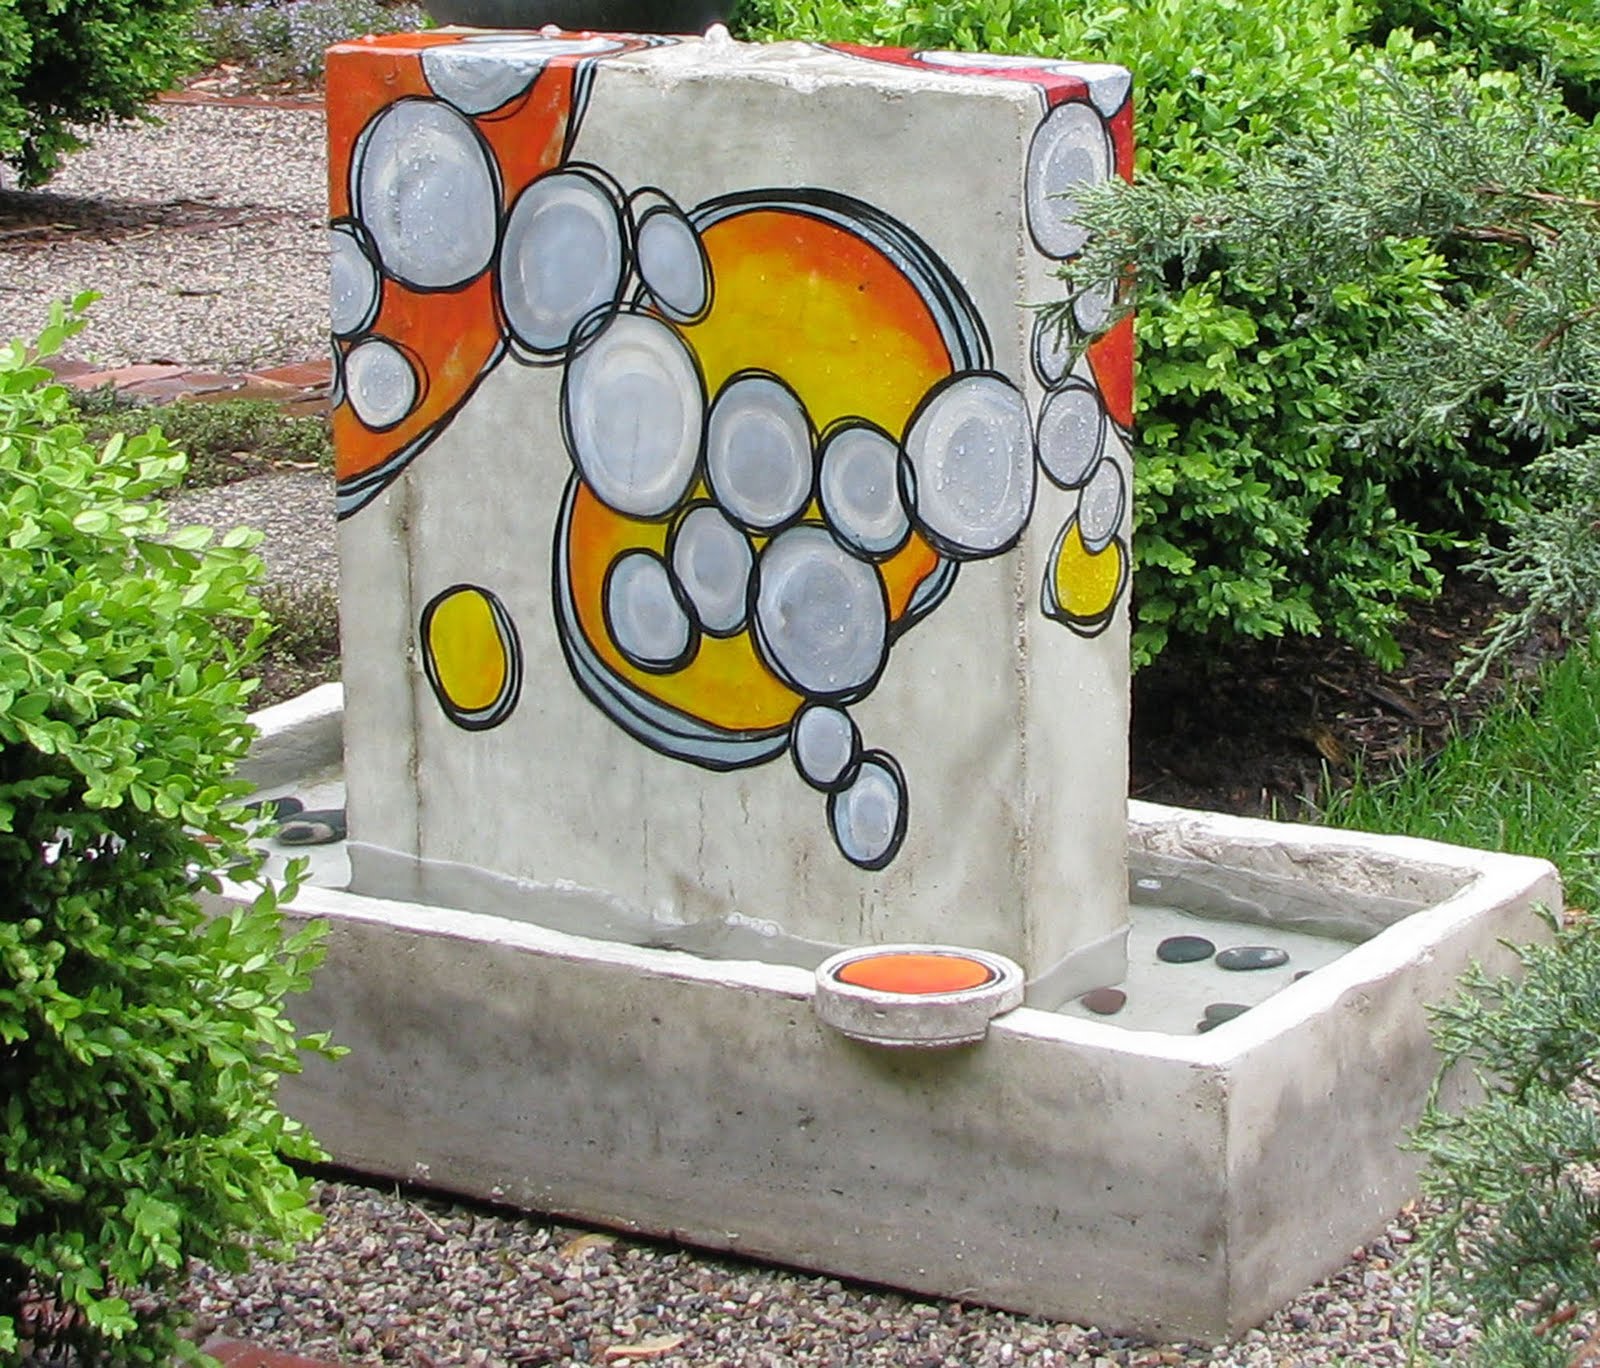 art studio: Some of my favorite concrete art pieces...